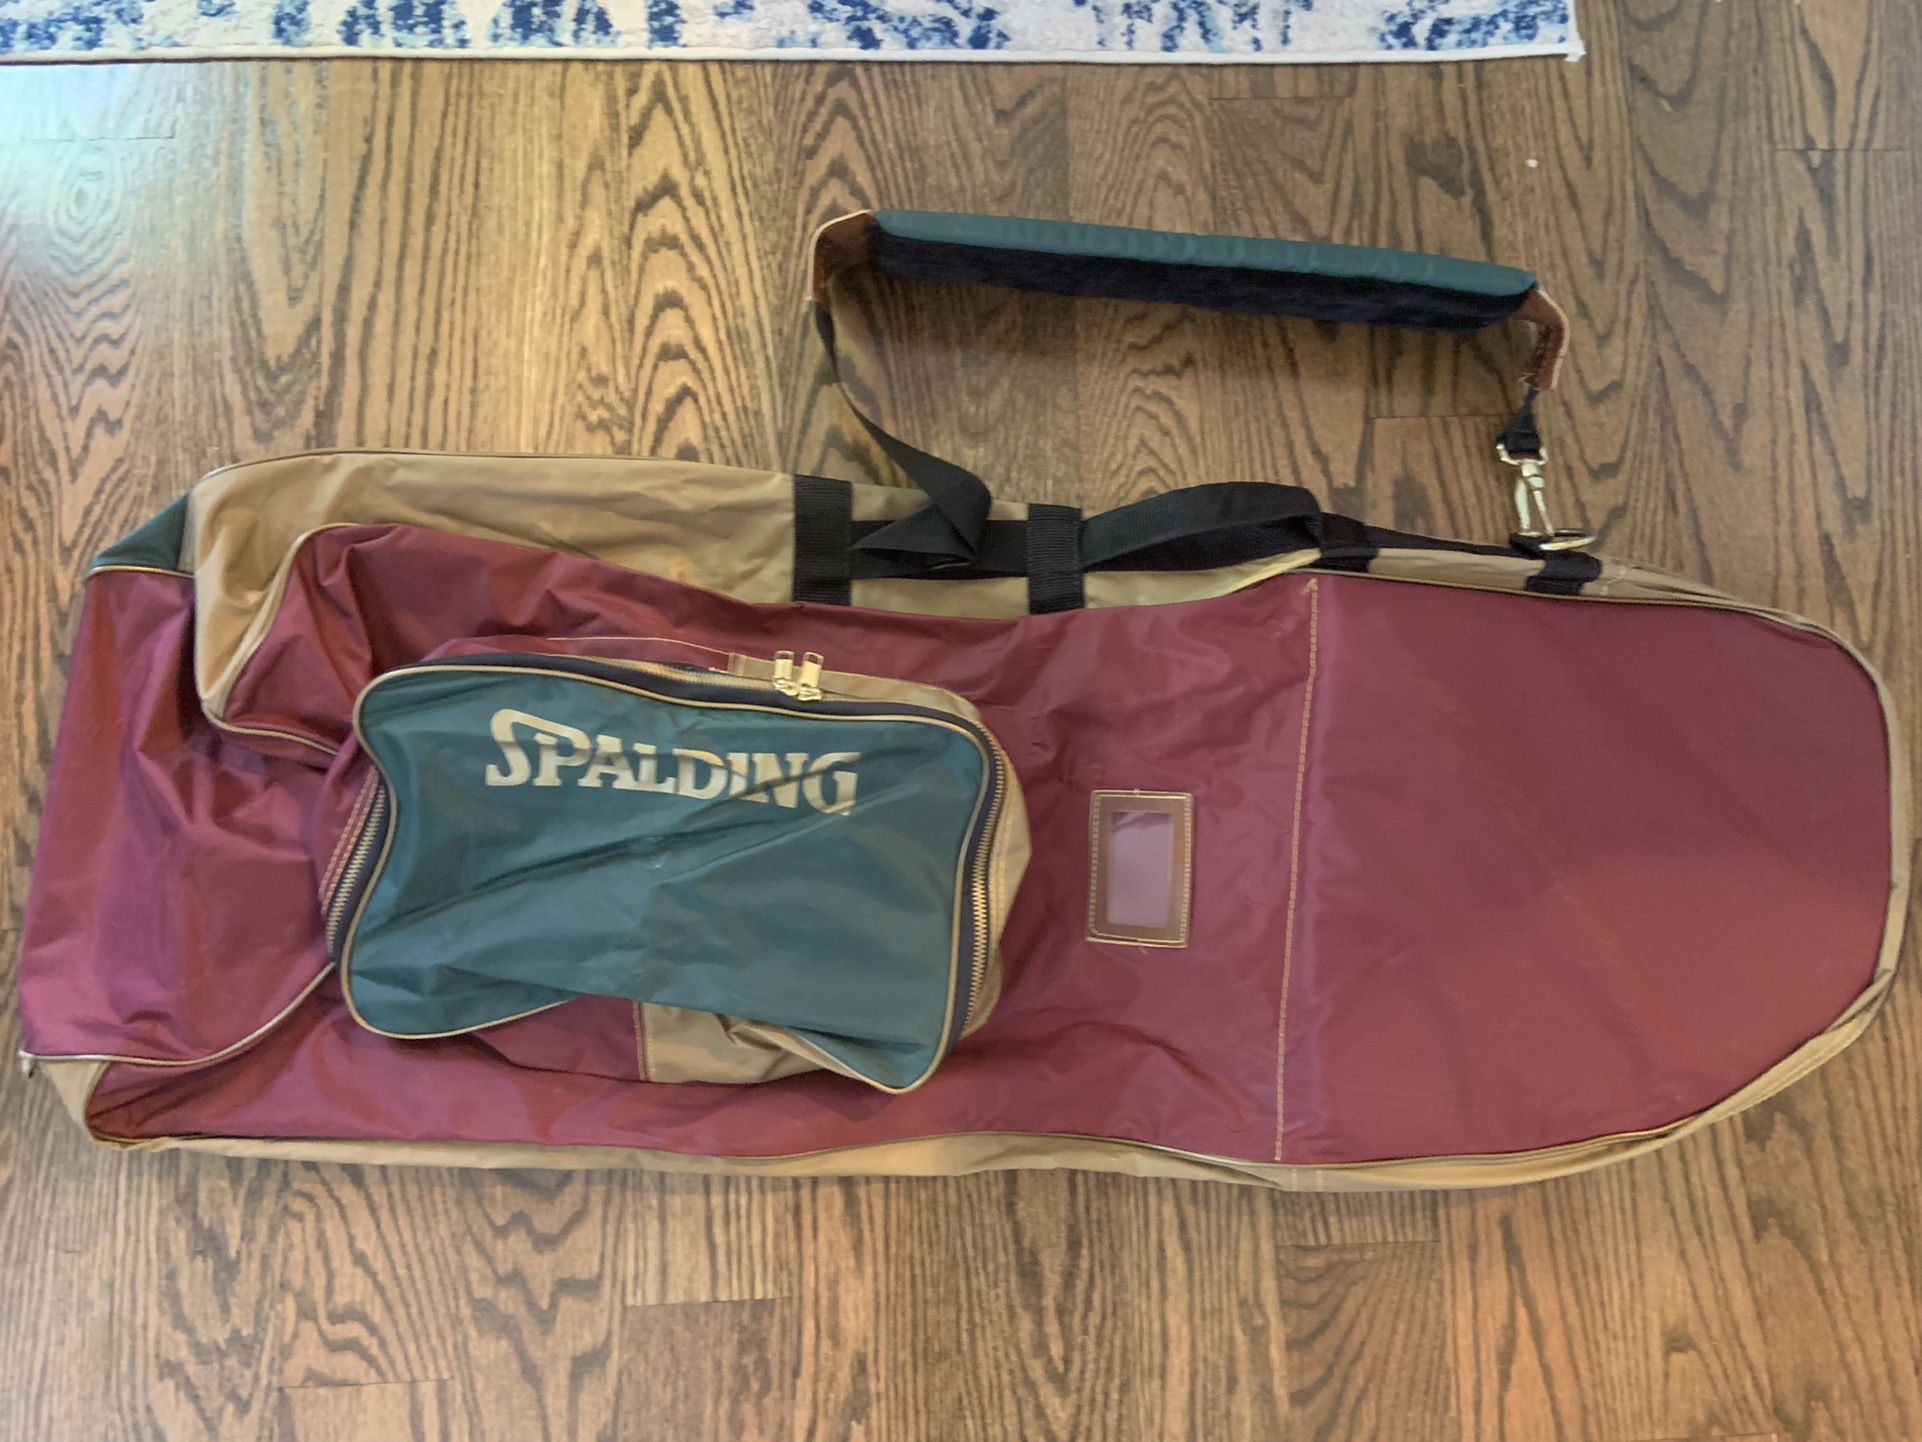 Spalding Golf Club Bag Deluxe Padded Nylon Travel 